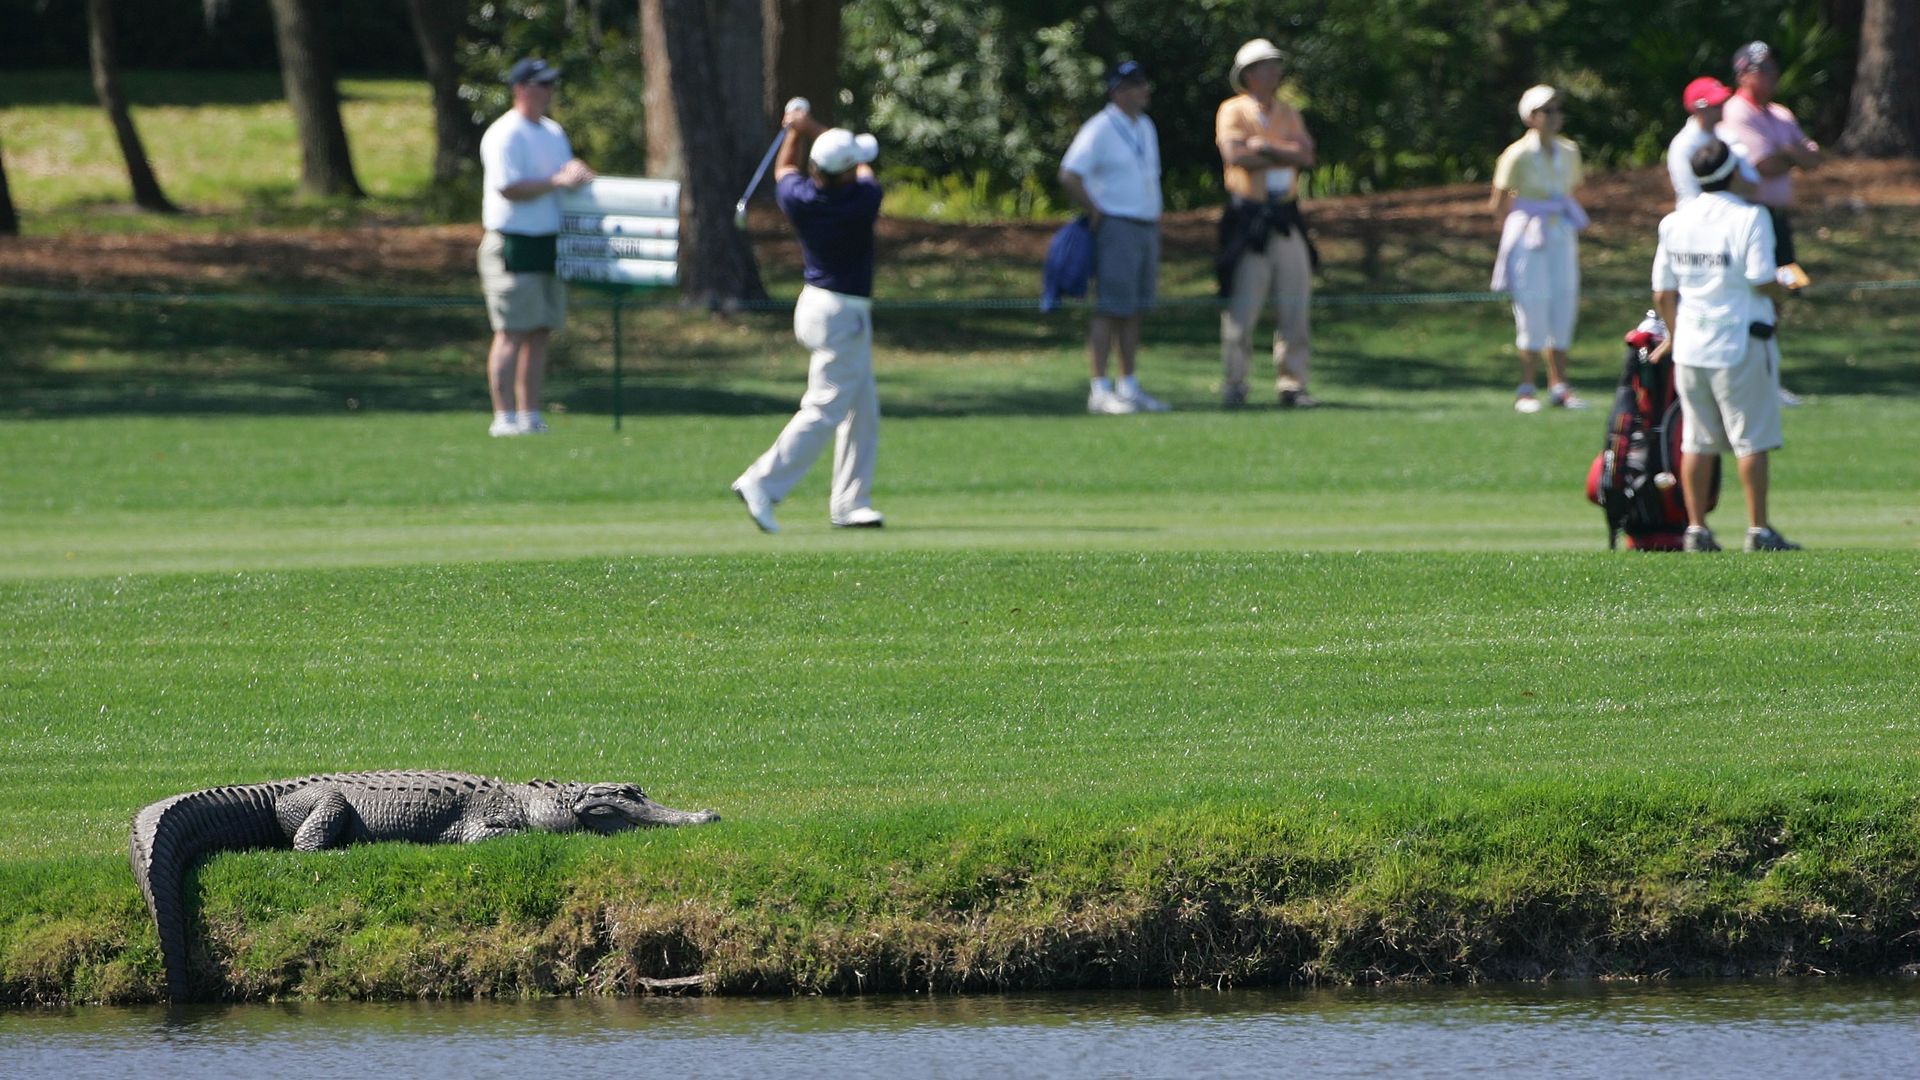 An alligator suns itself on a golf course